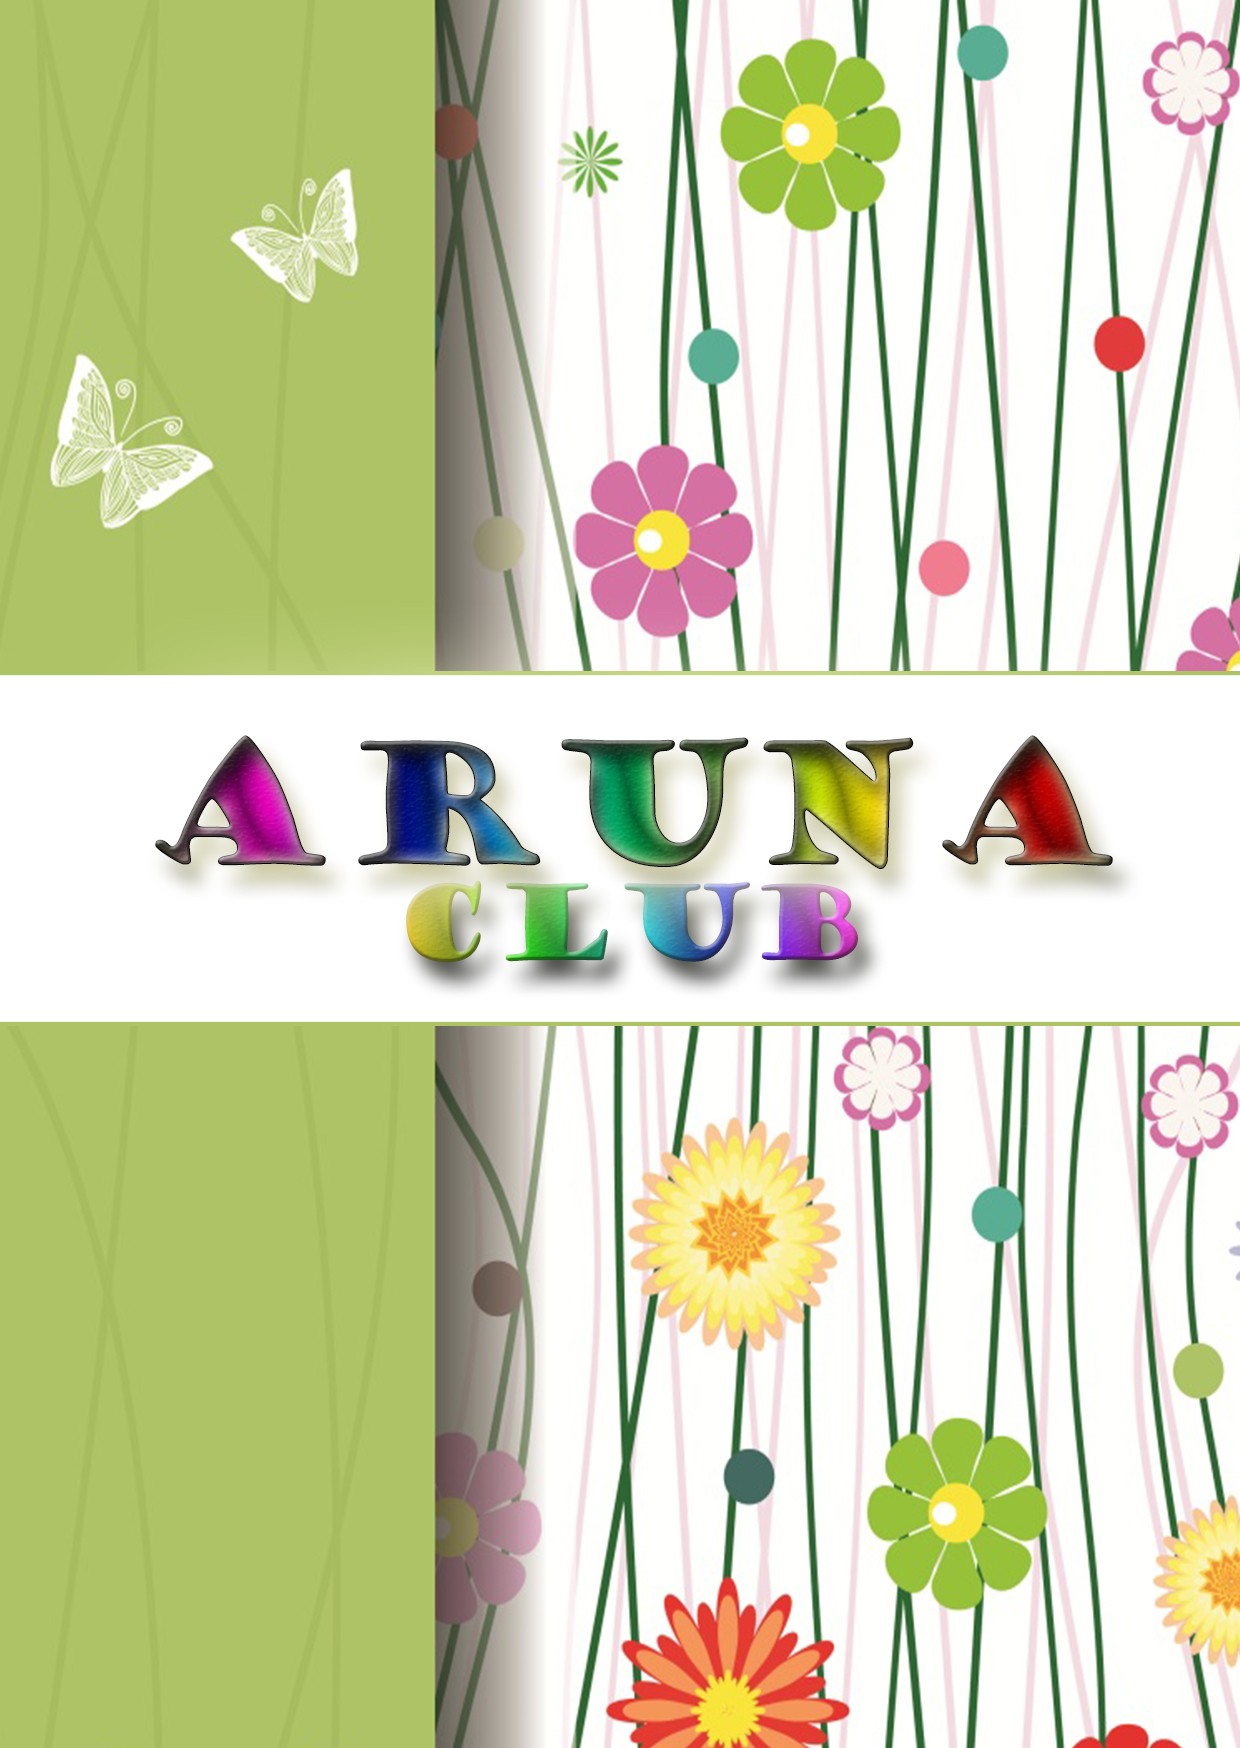 Детский сад "Aruna club"